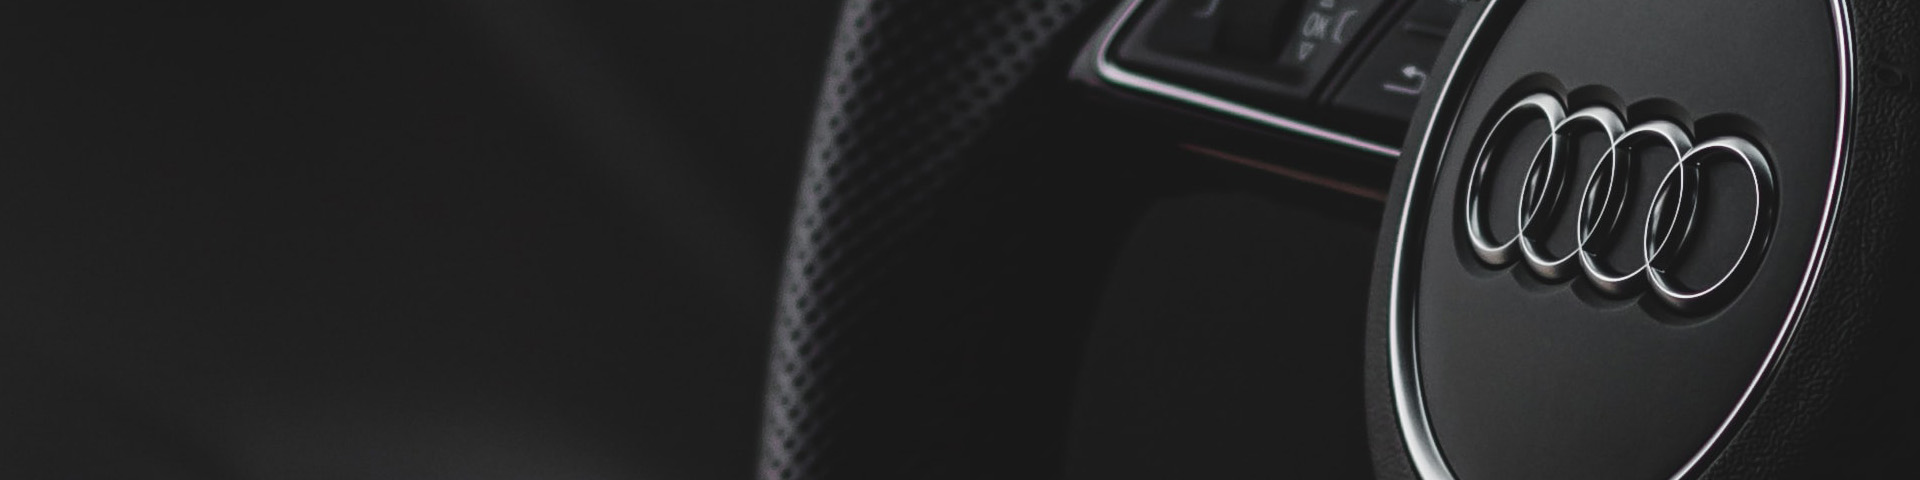 Audi Q6 Backdrop